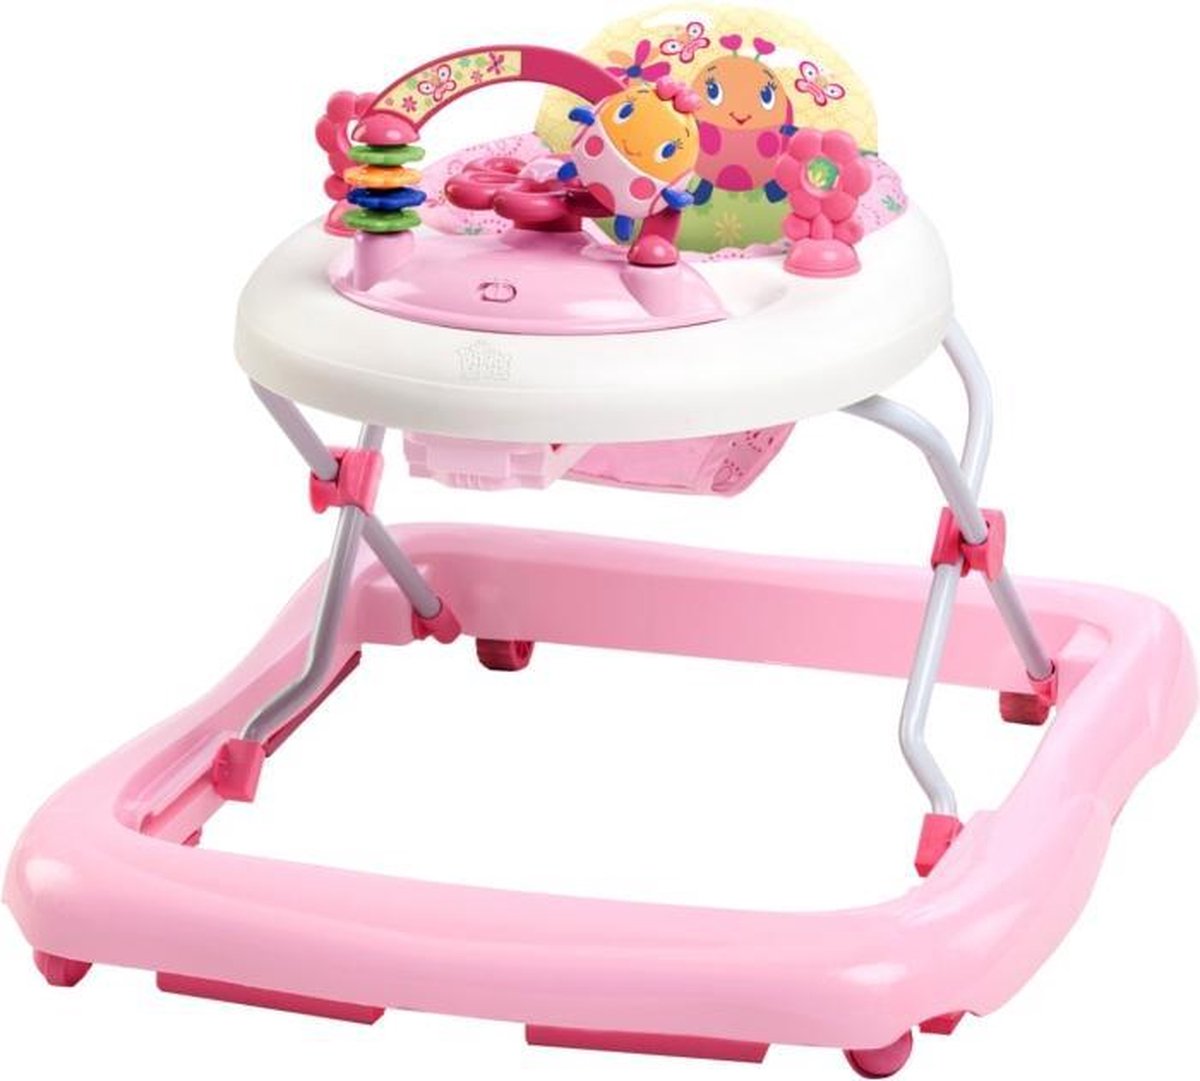 Babywalker roze Walk-A-Bout JuneBerry Delight Bright Starts loopstoel roos  | bol.com